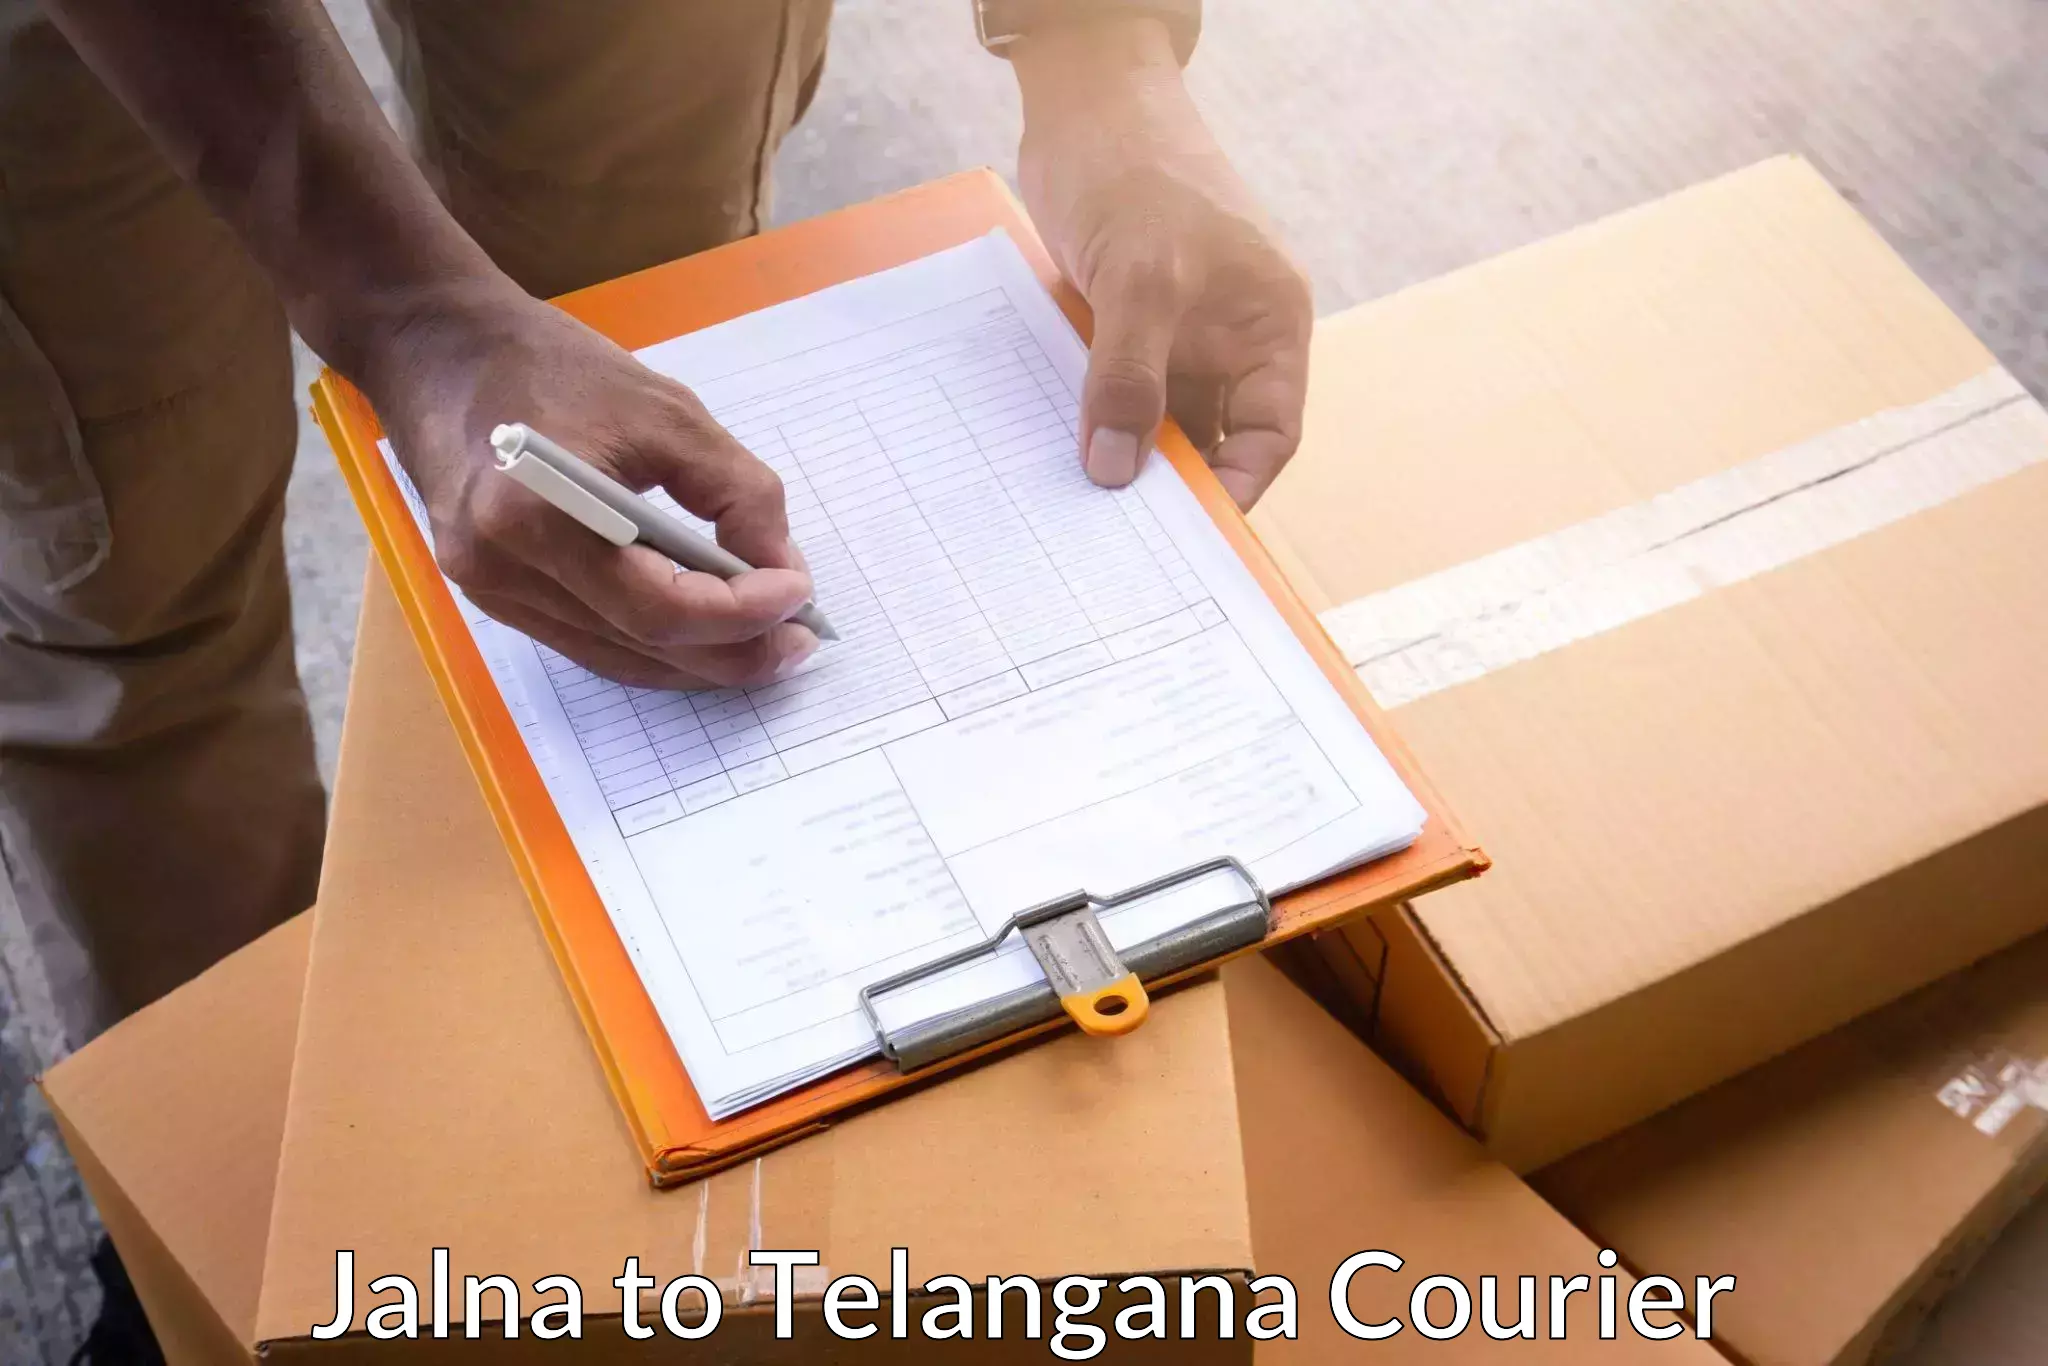 User-friendly courier app Jalna to Tallada